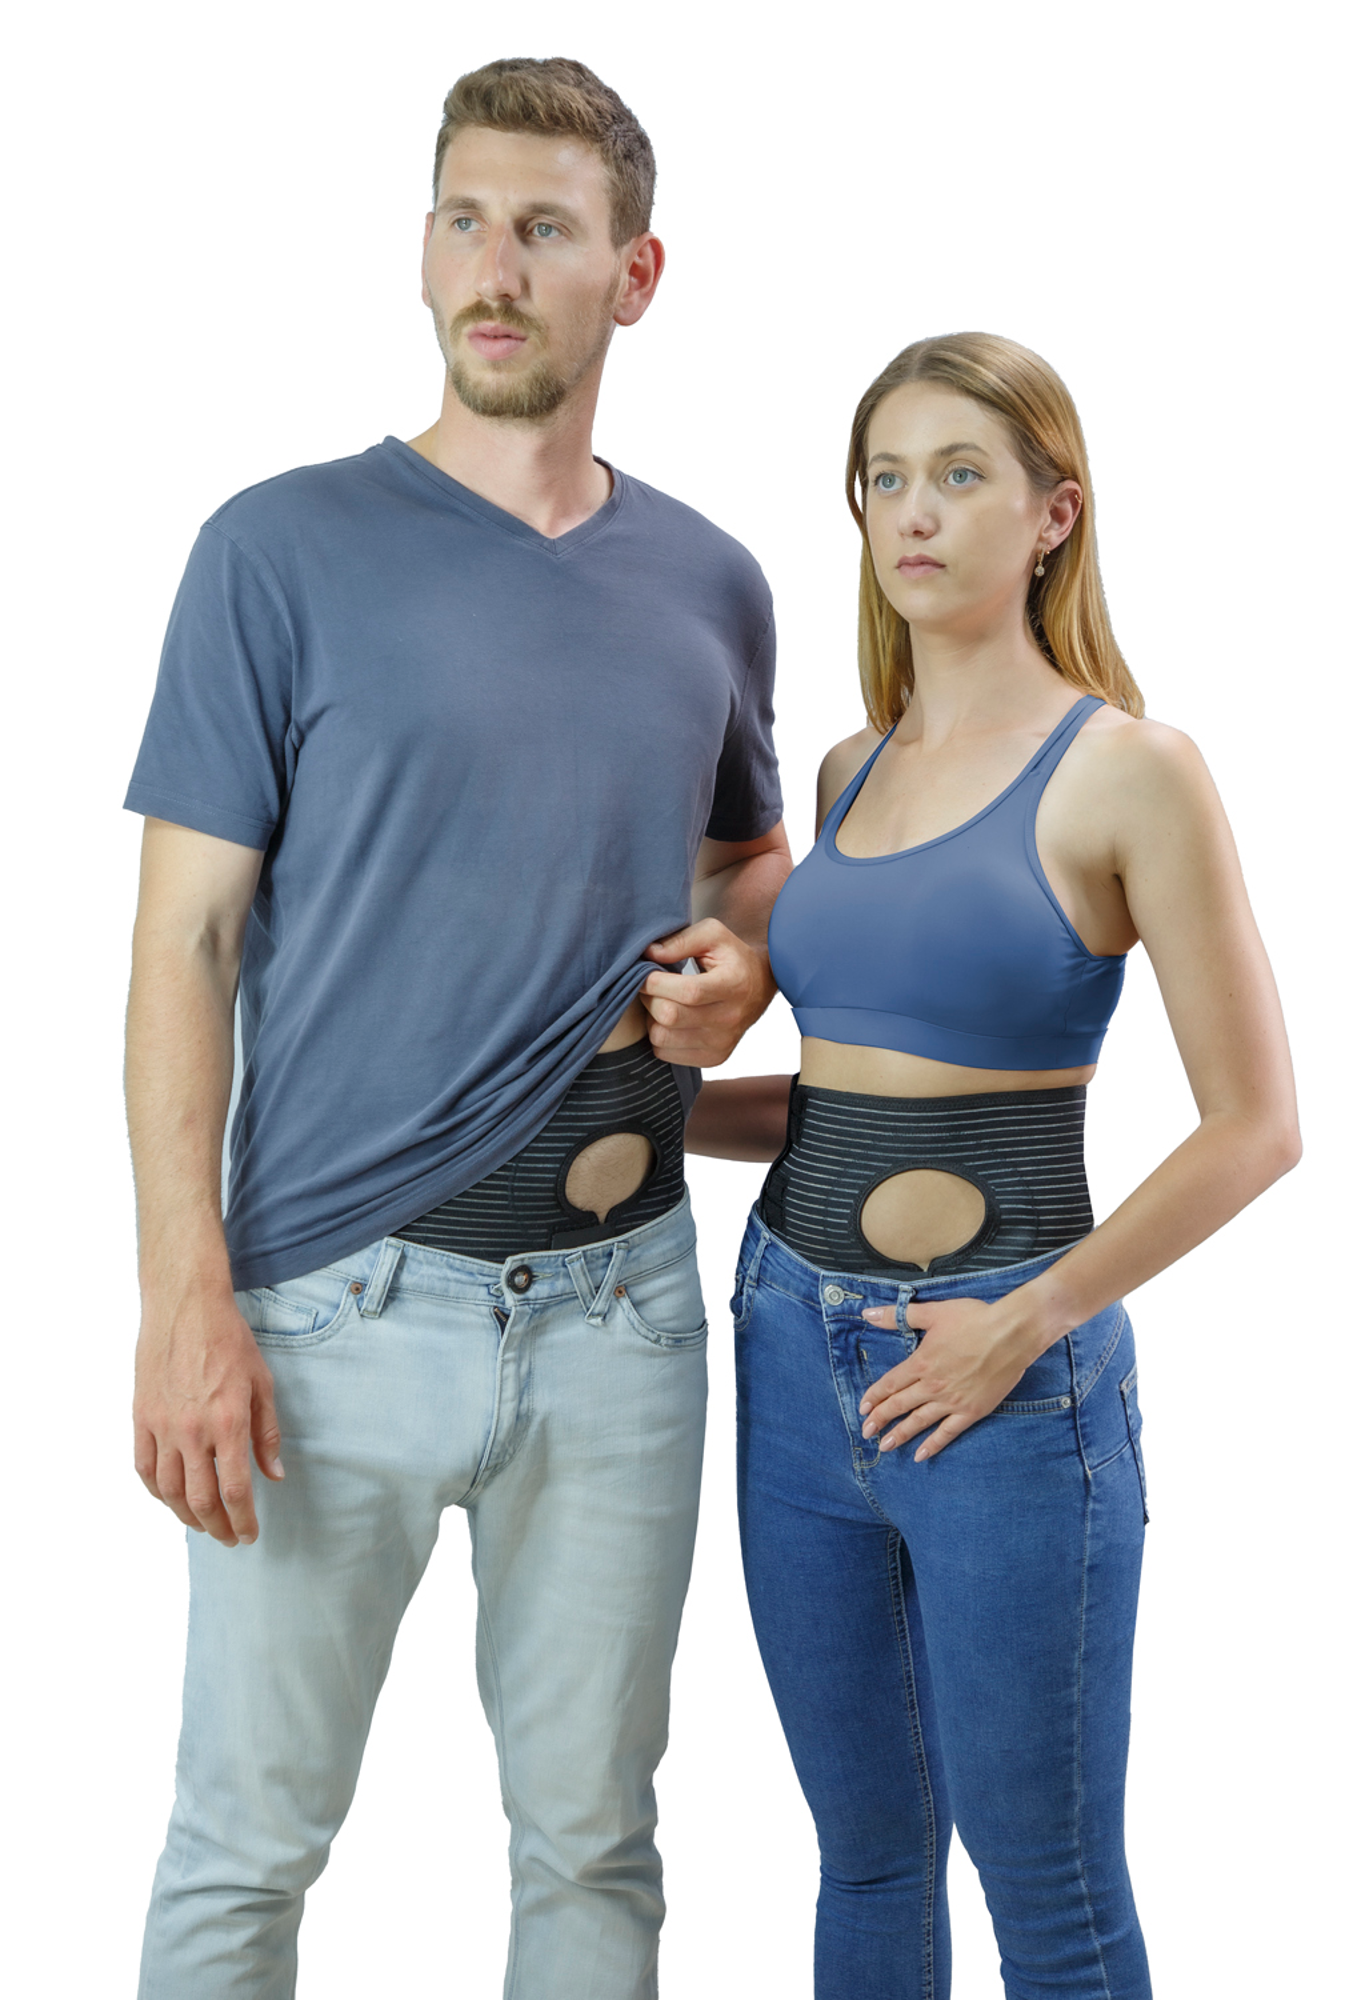 Unisex abdomen waist belt - Assorted colors